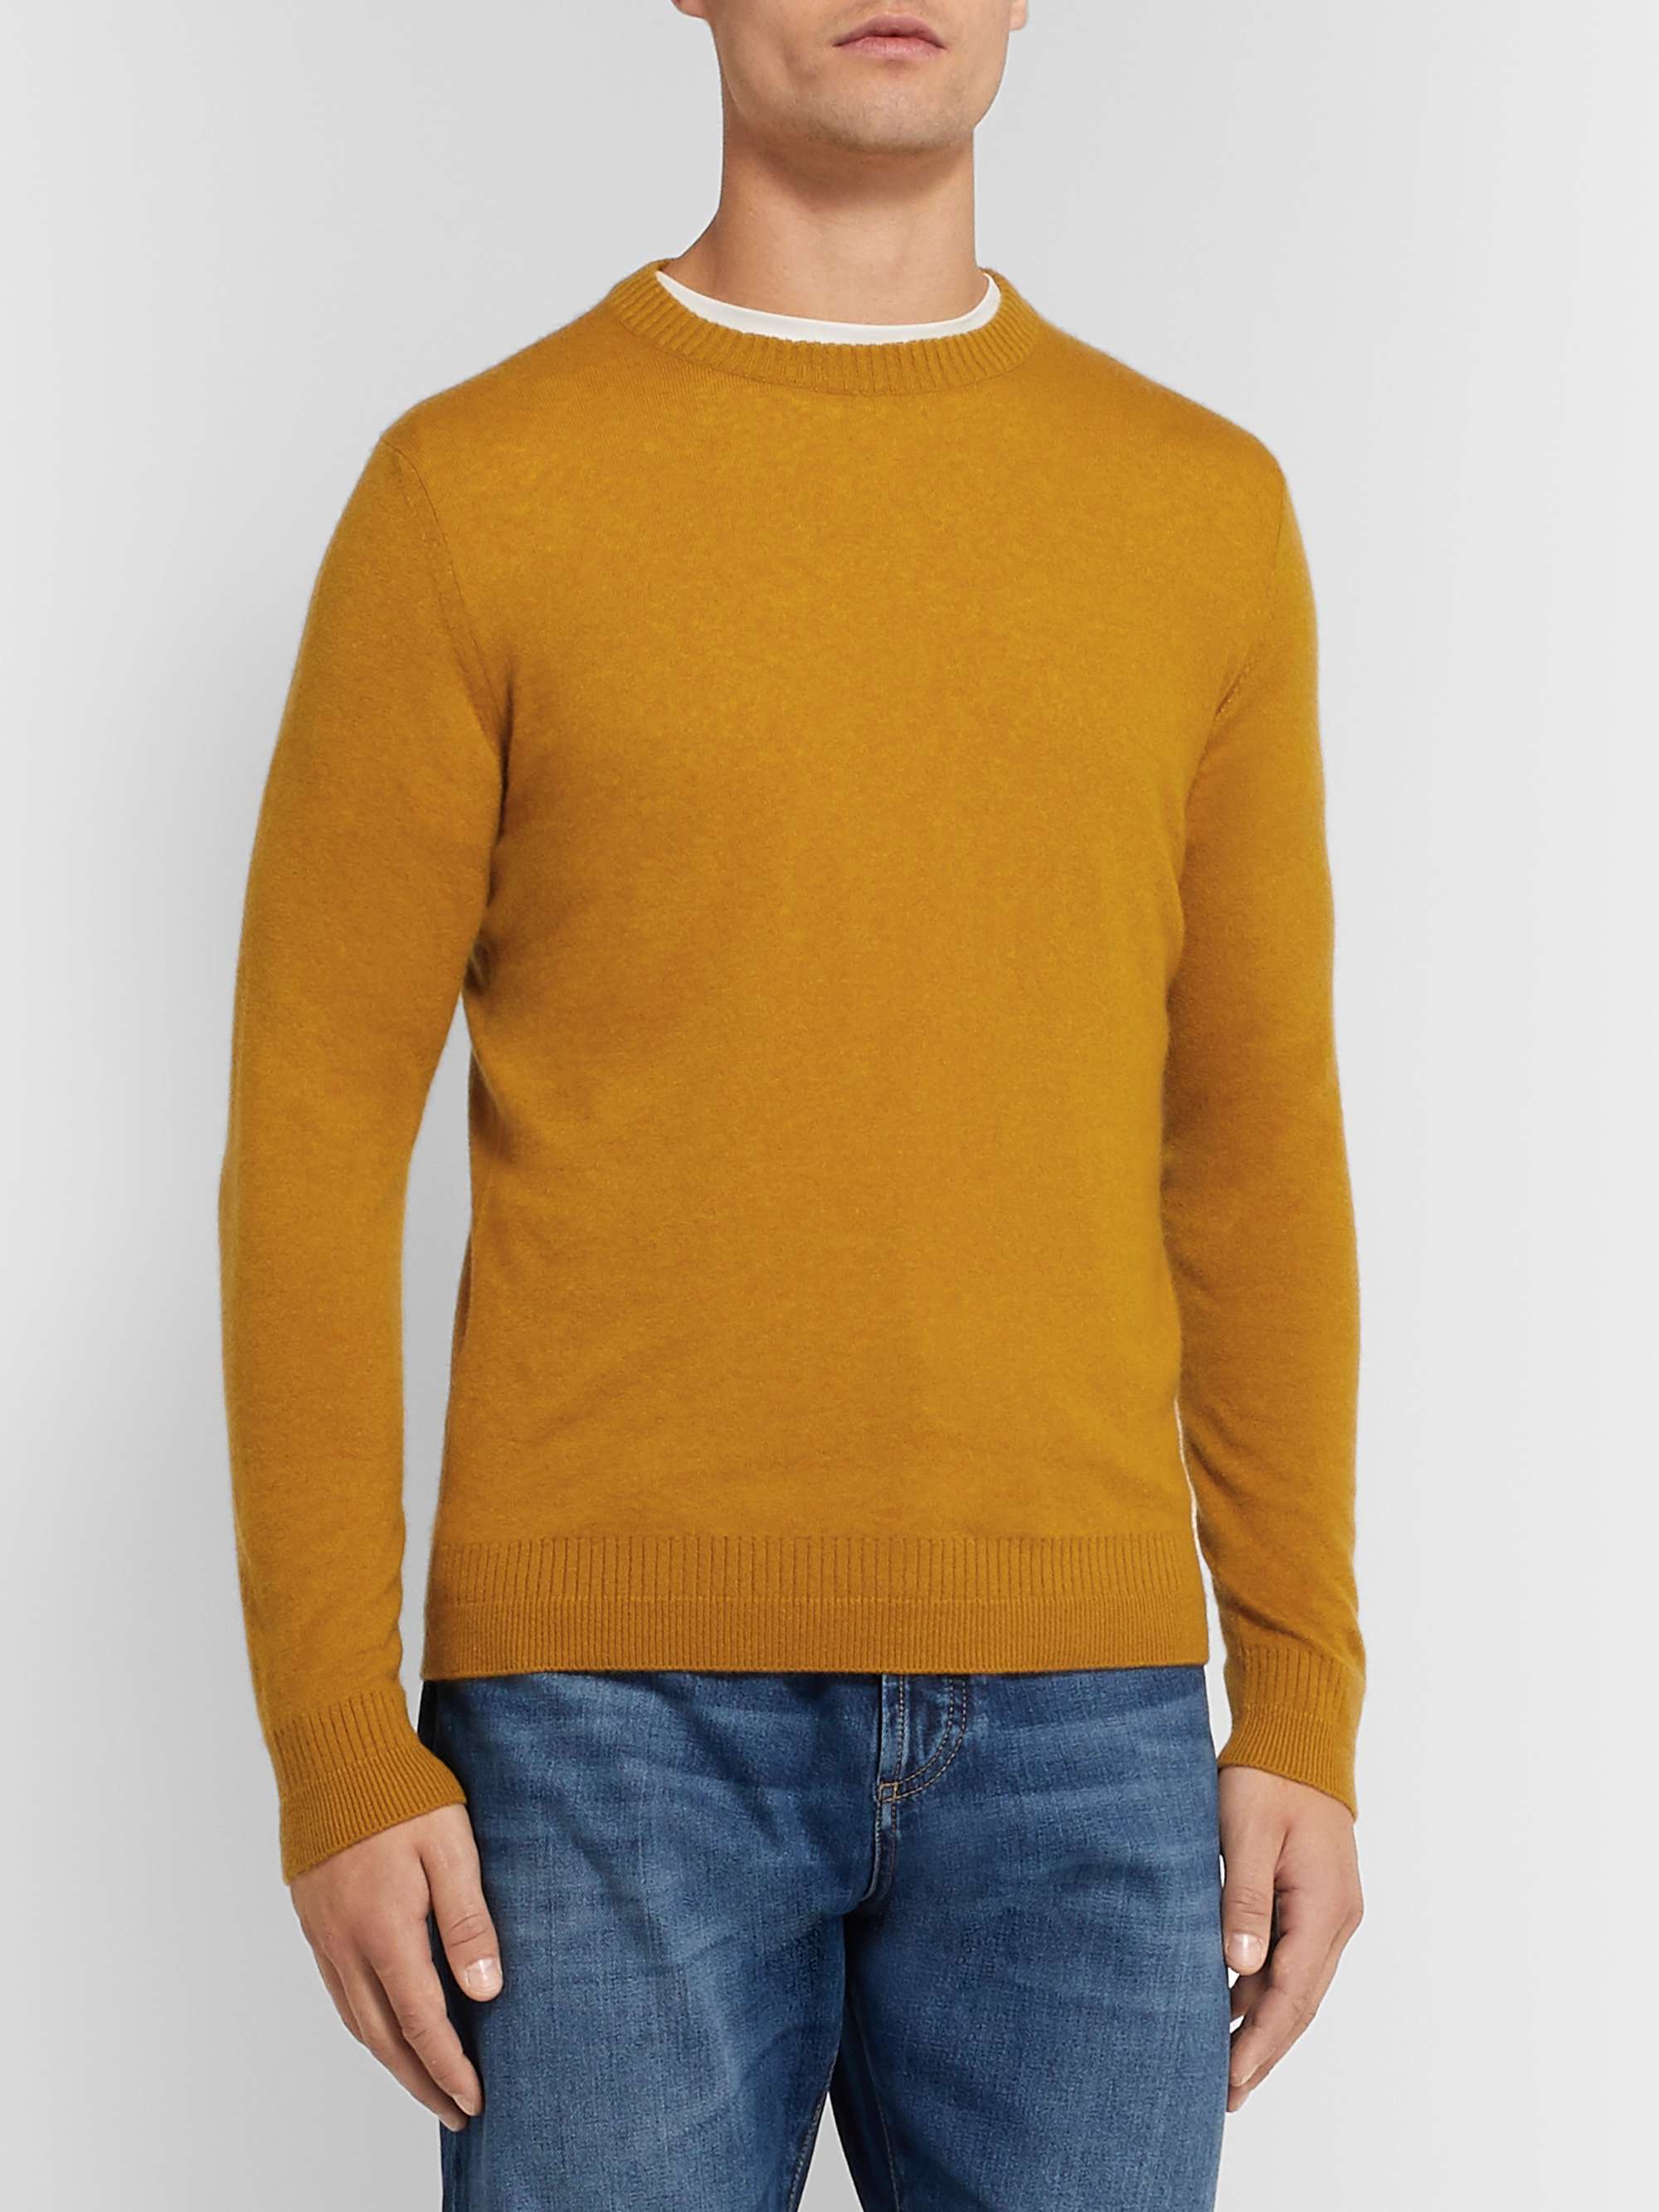 LORO PIANA Cashmere and Silk-Blend Sweater for Men | MR PORTER